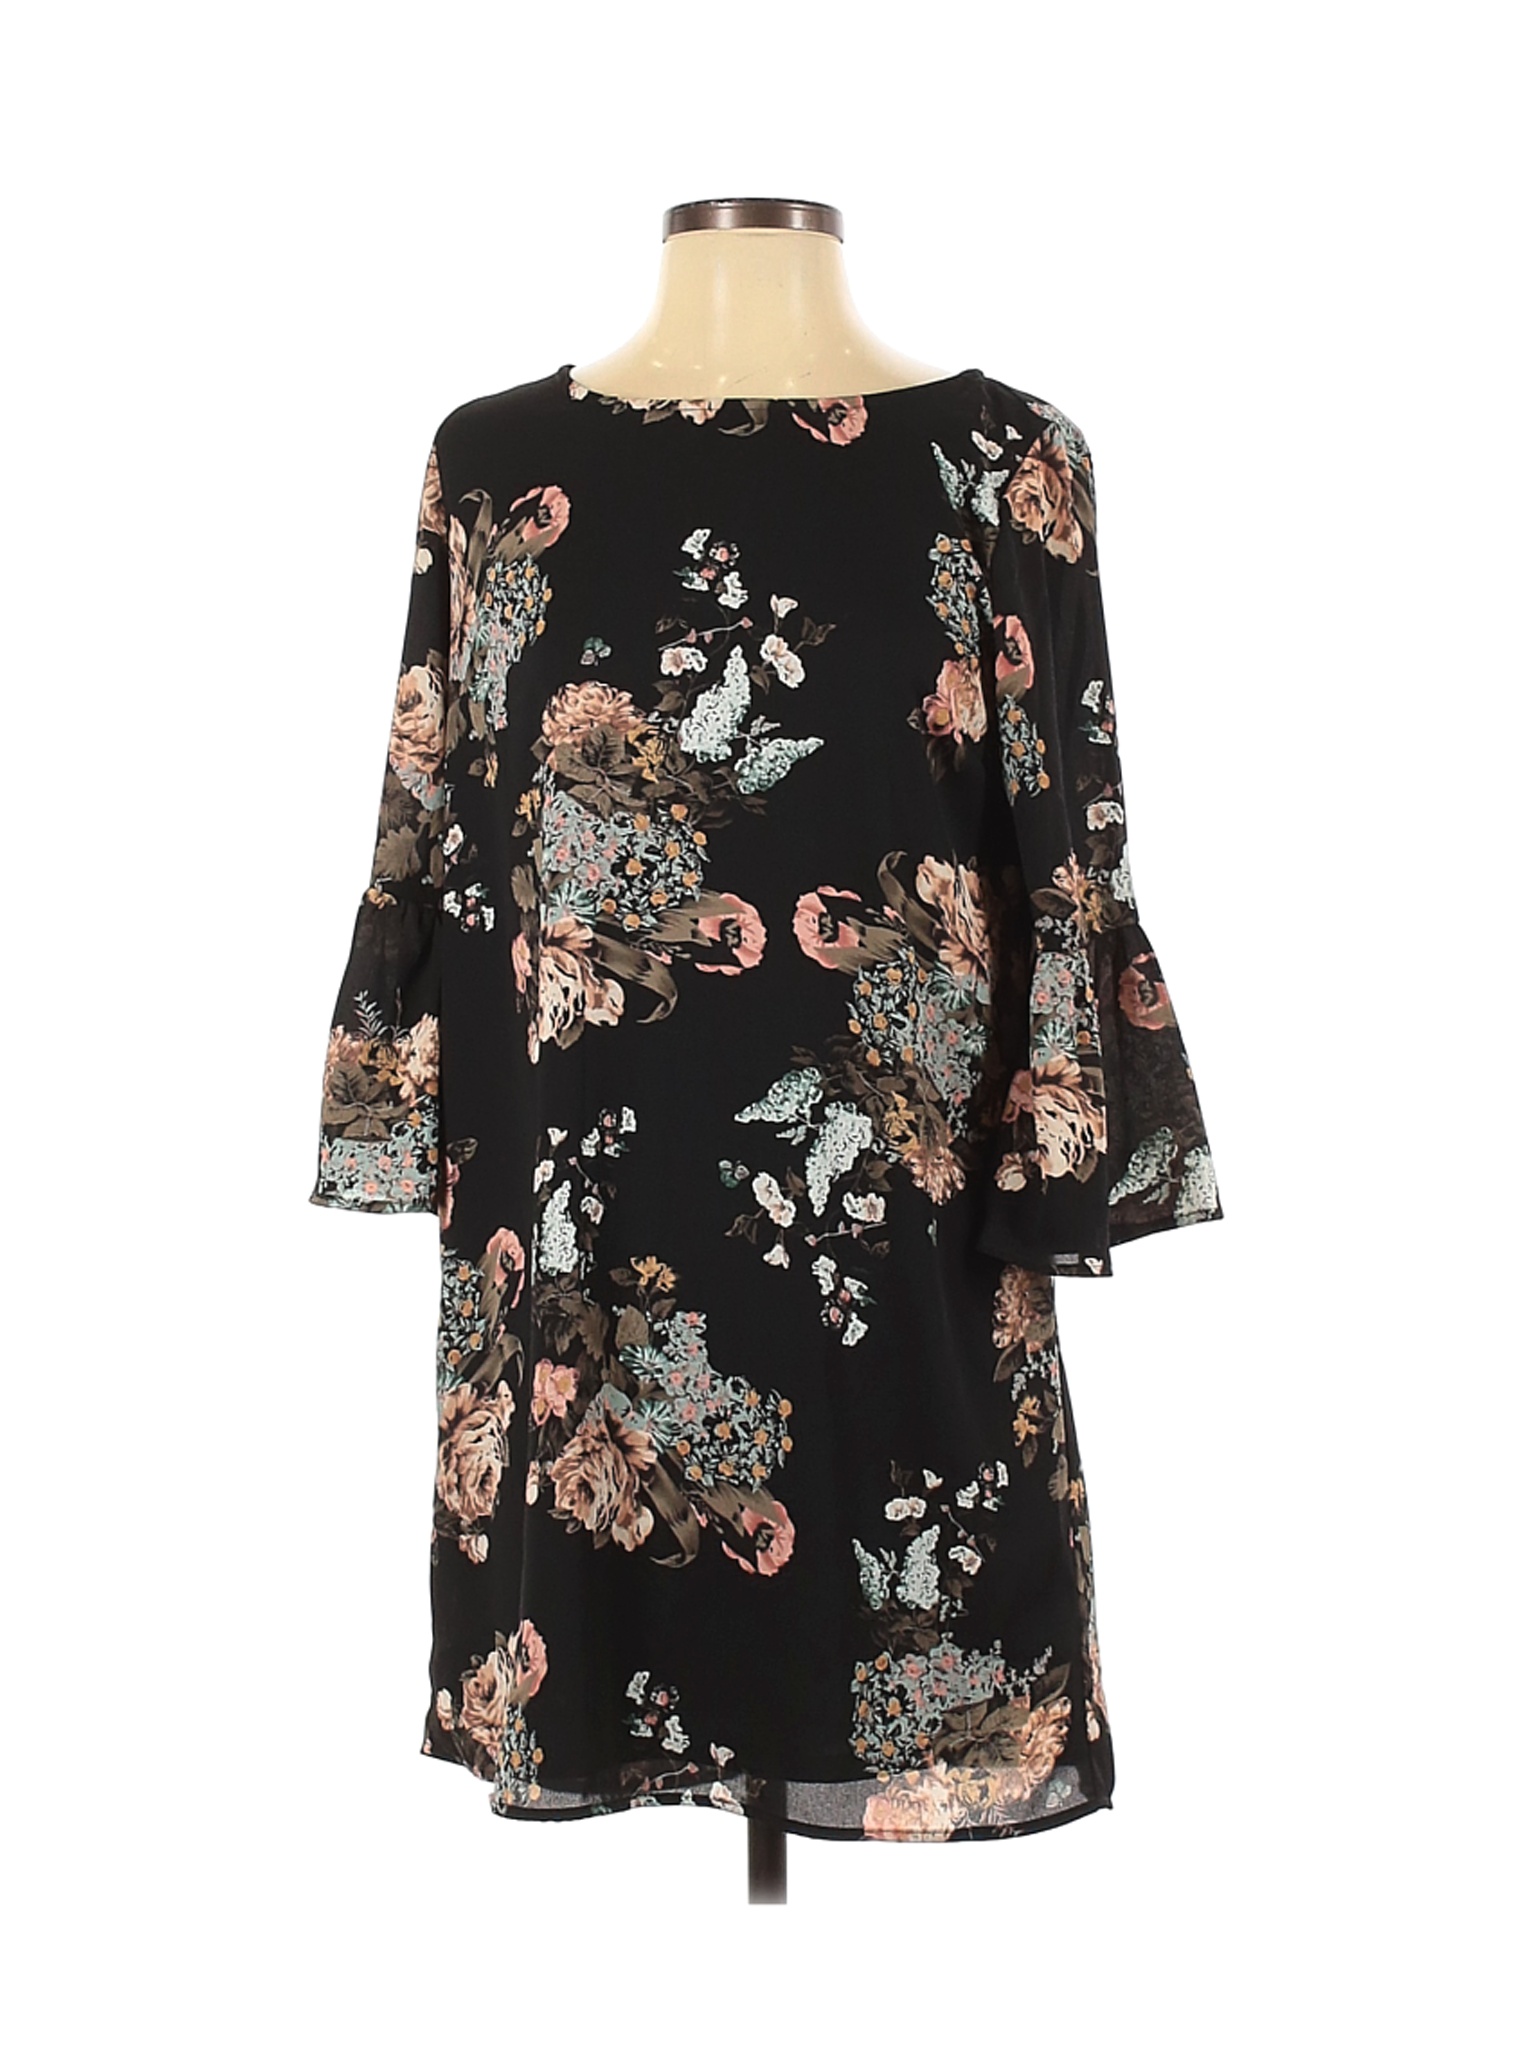 Mia + Tess Women Black Casual Dress S | eBay